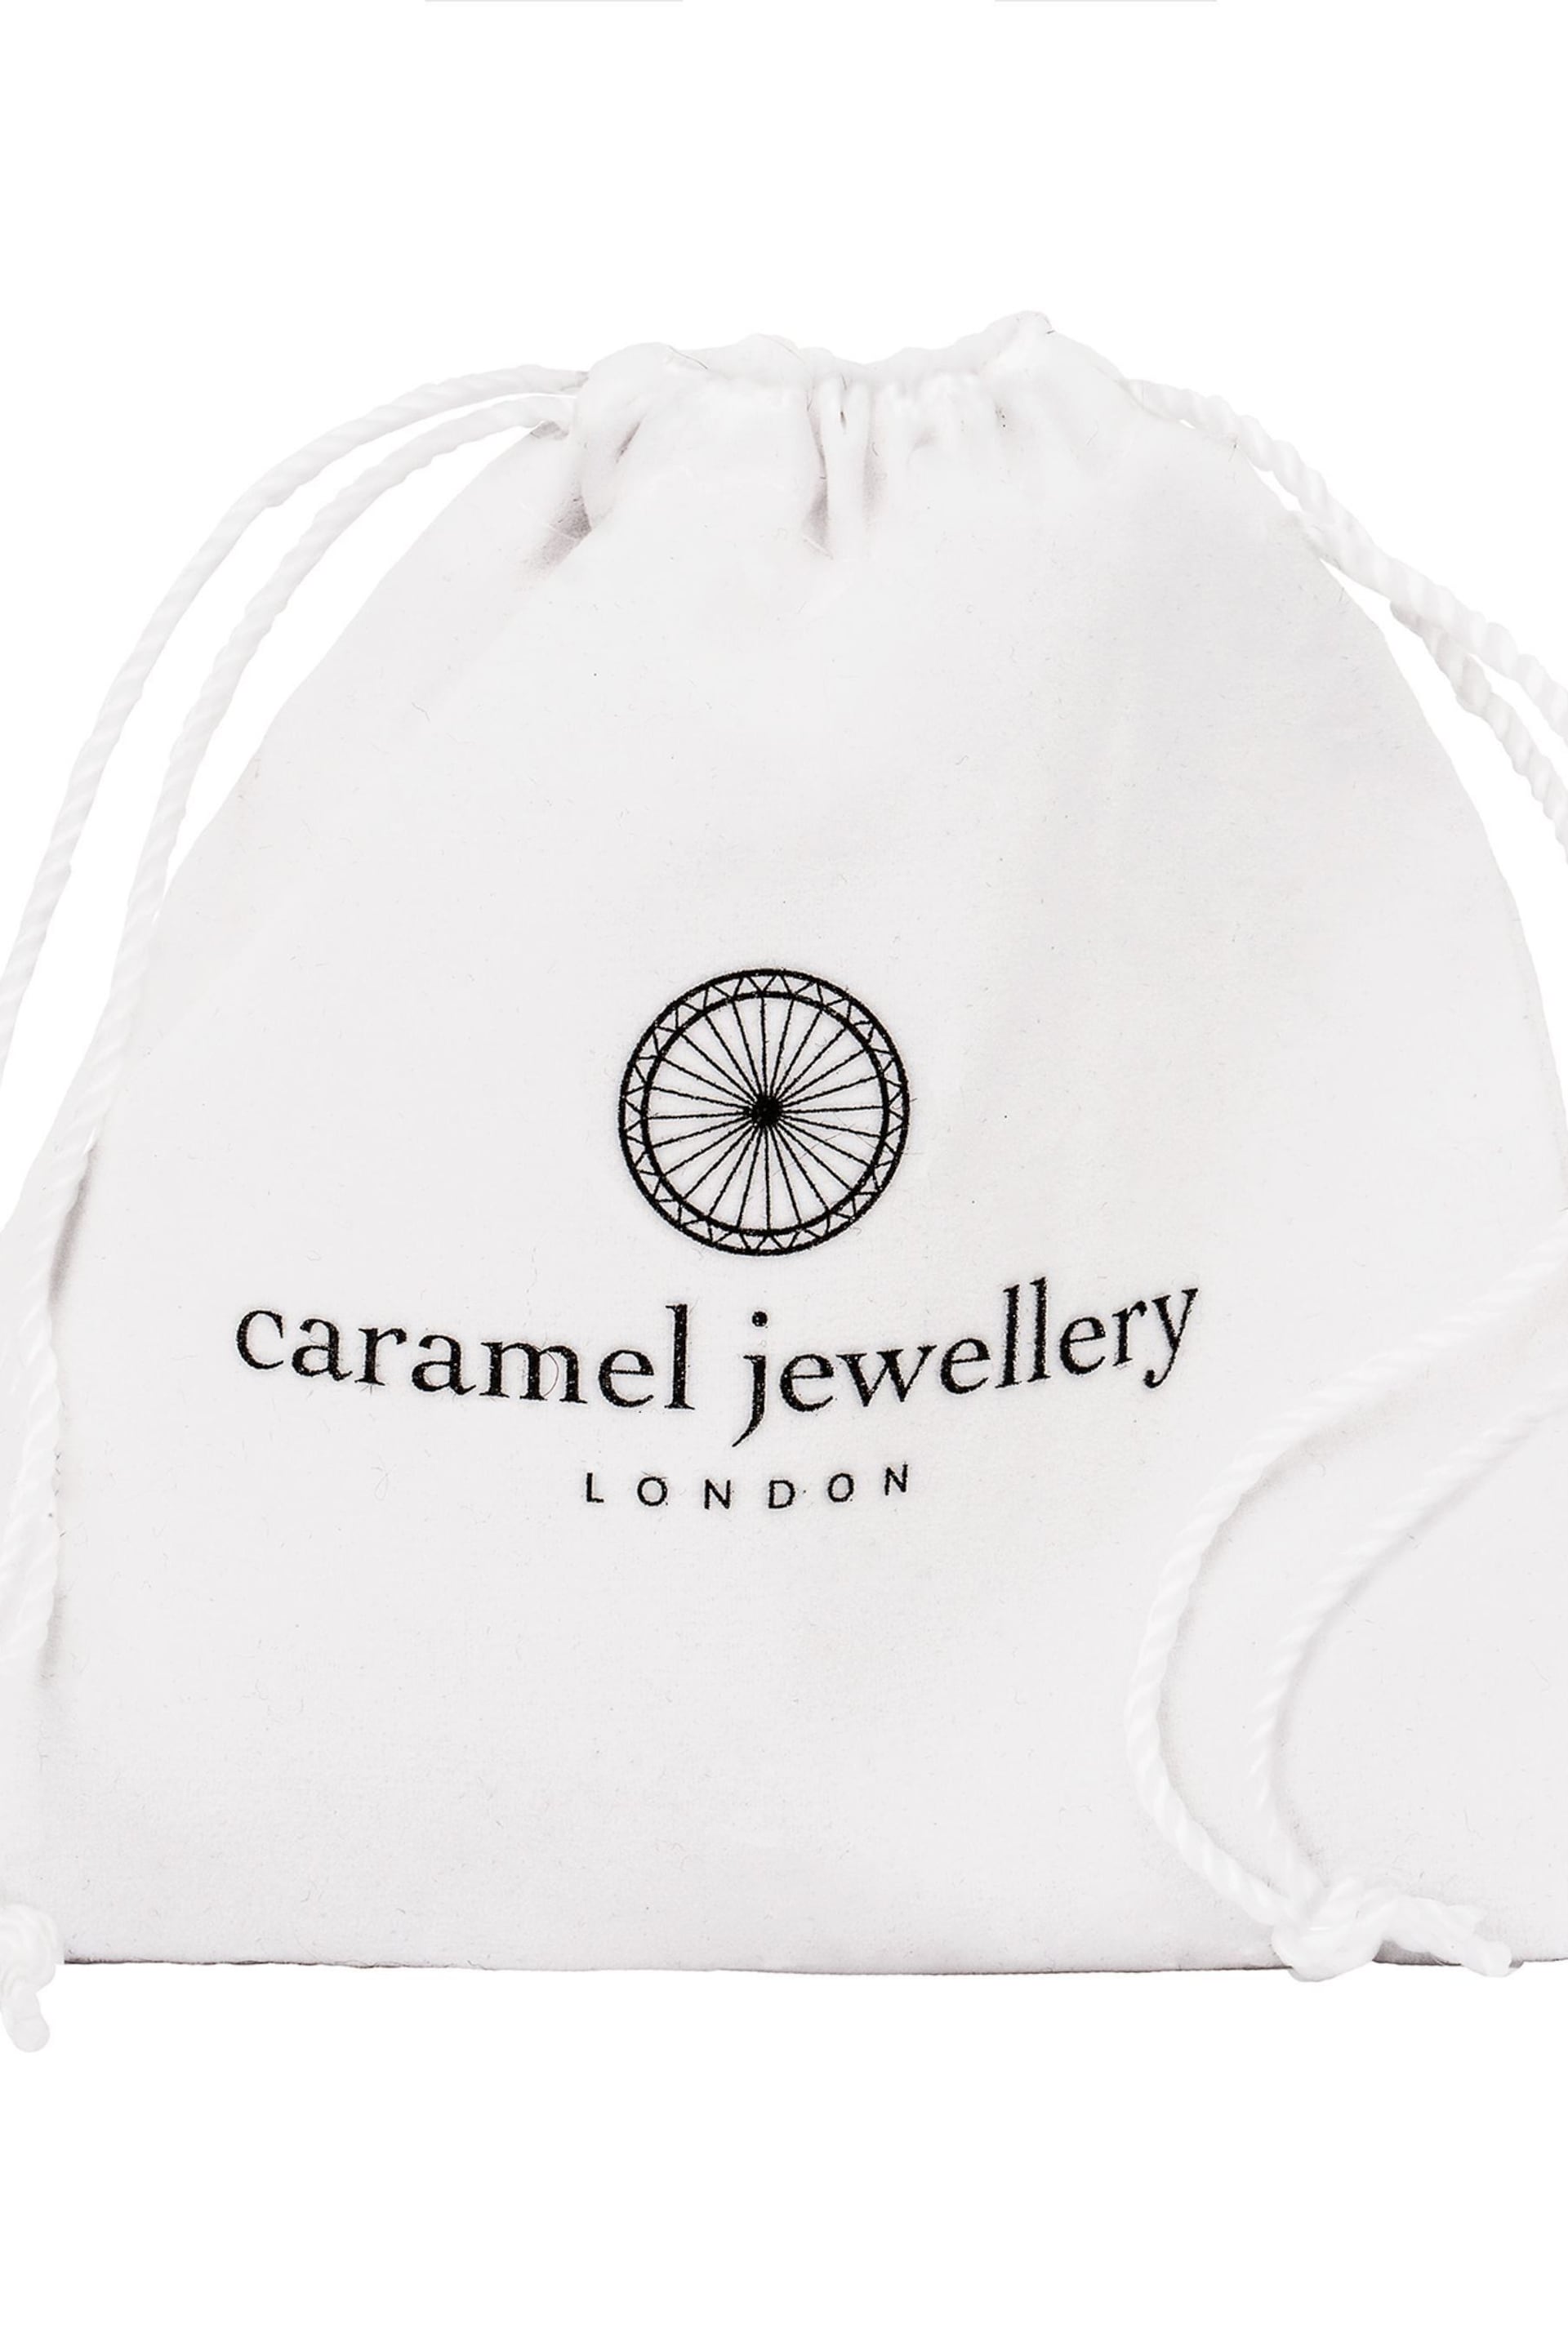 Caramel Jewellery London Silver Chunky 'Cherish' Bracelet - Image 4 of 4